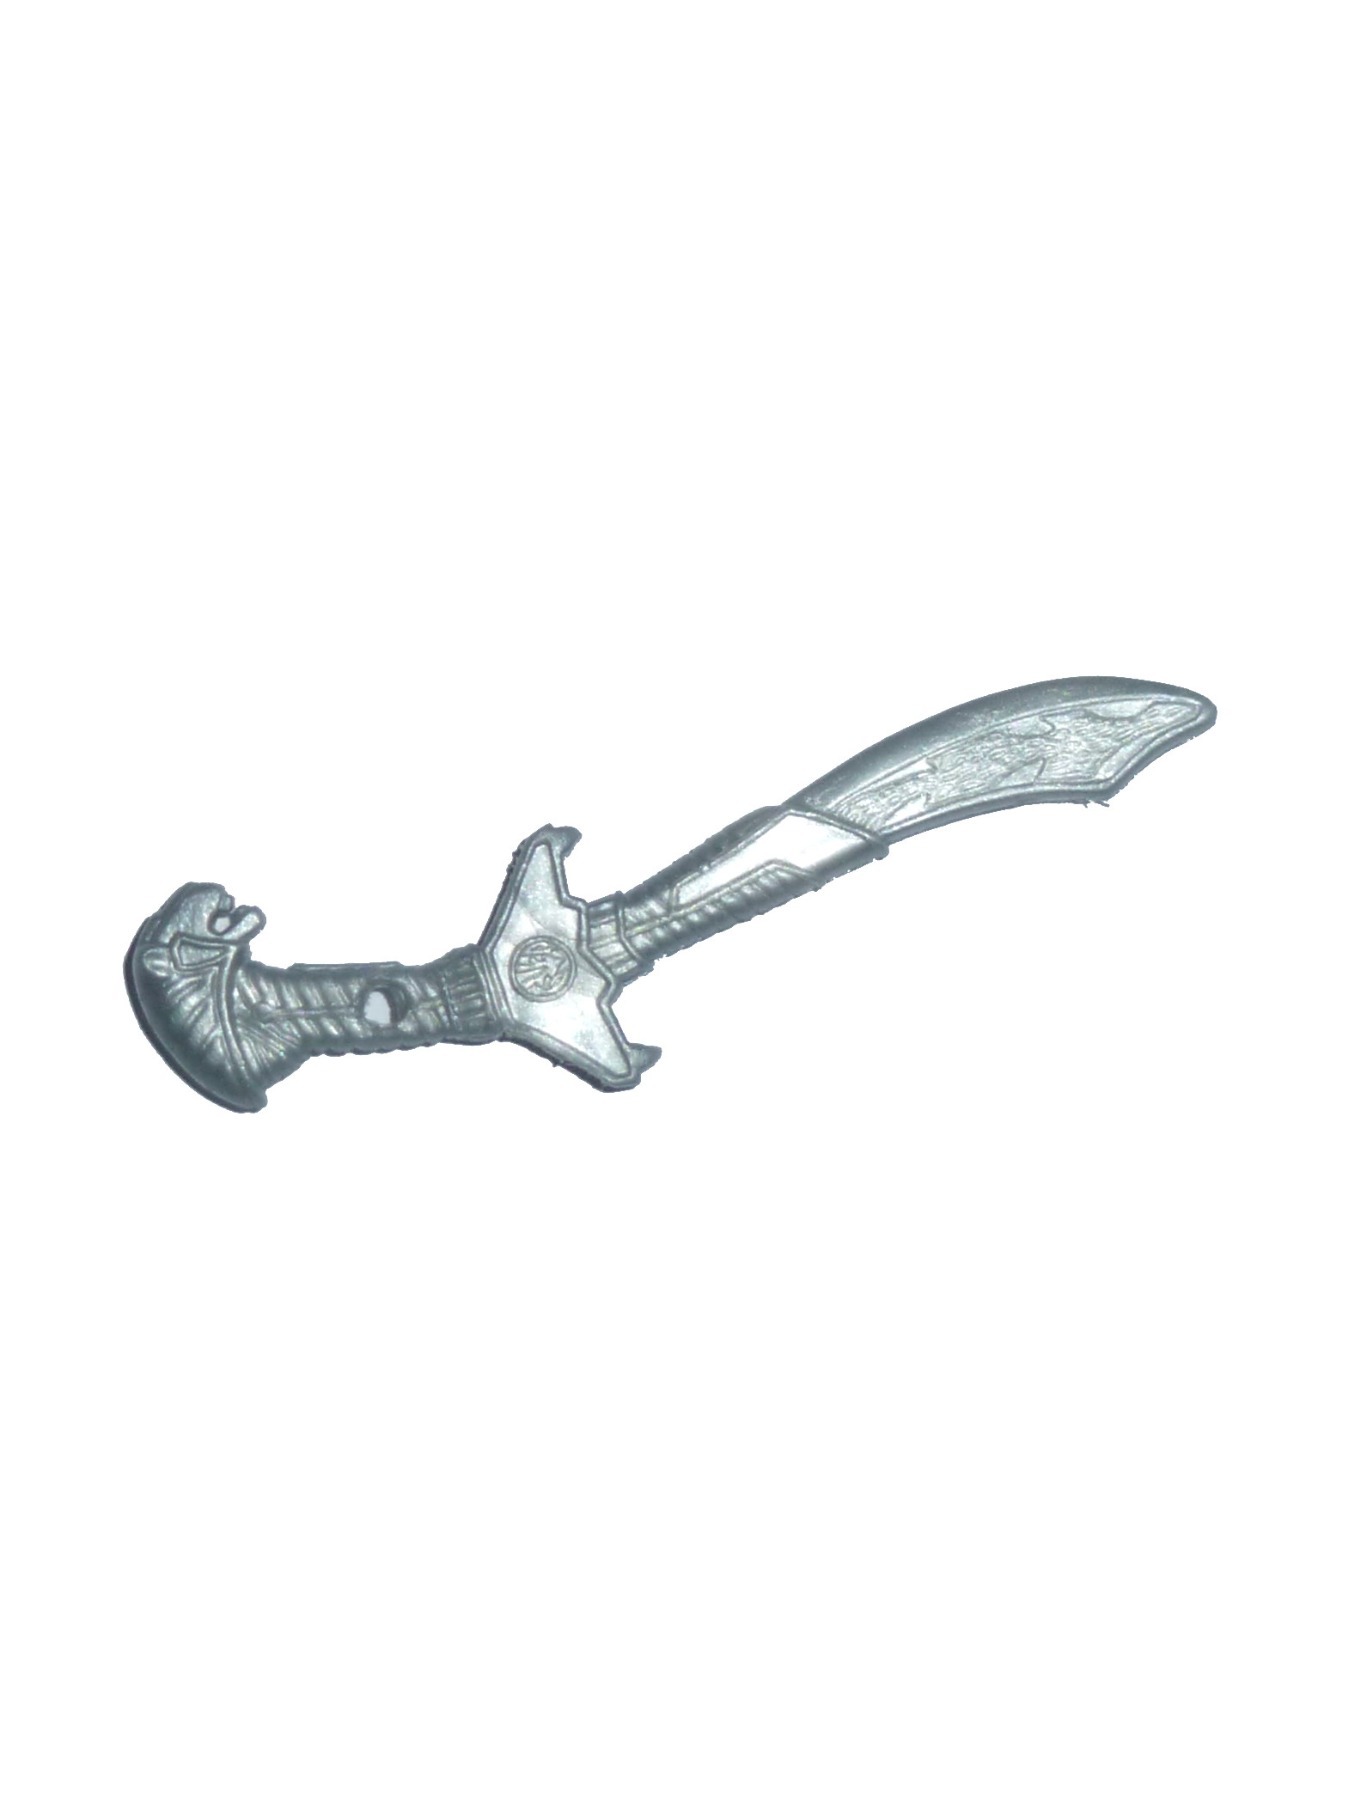 White Tigerzord sword / Weapon accessory